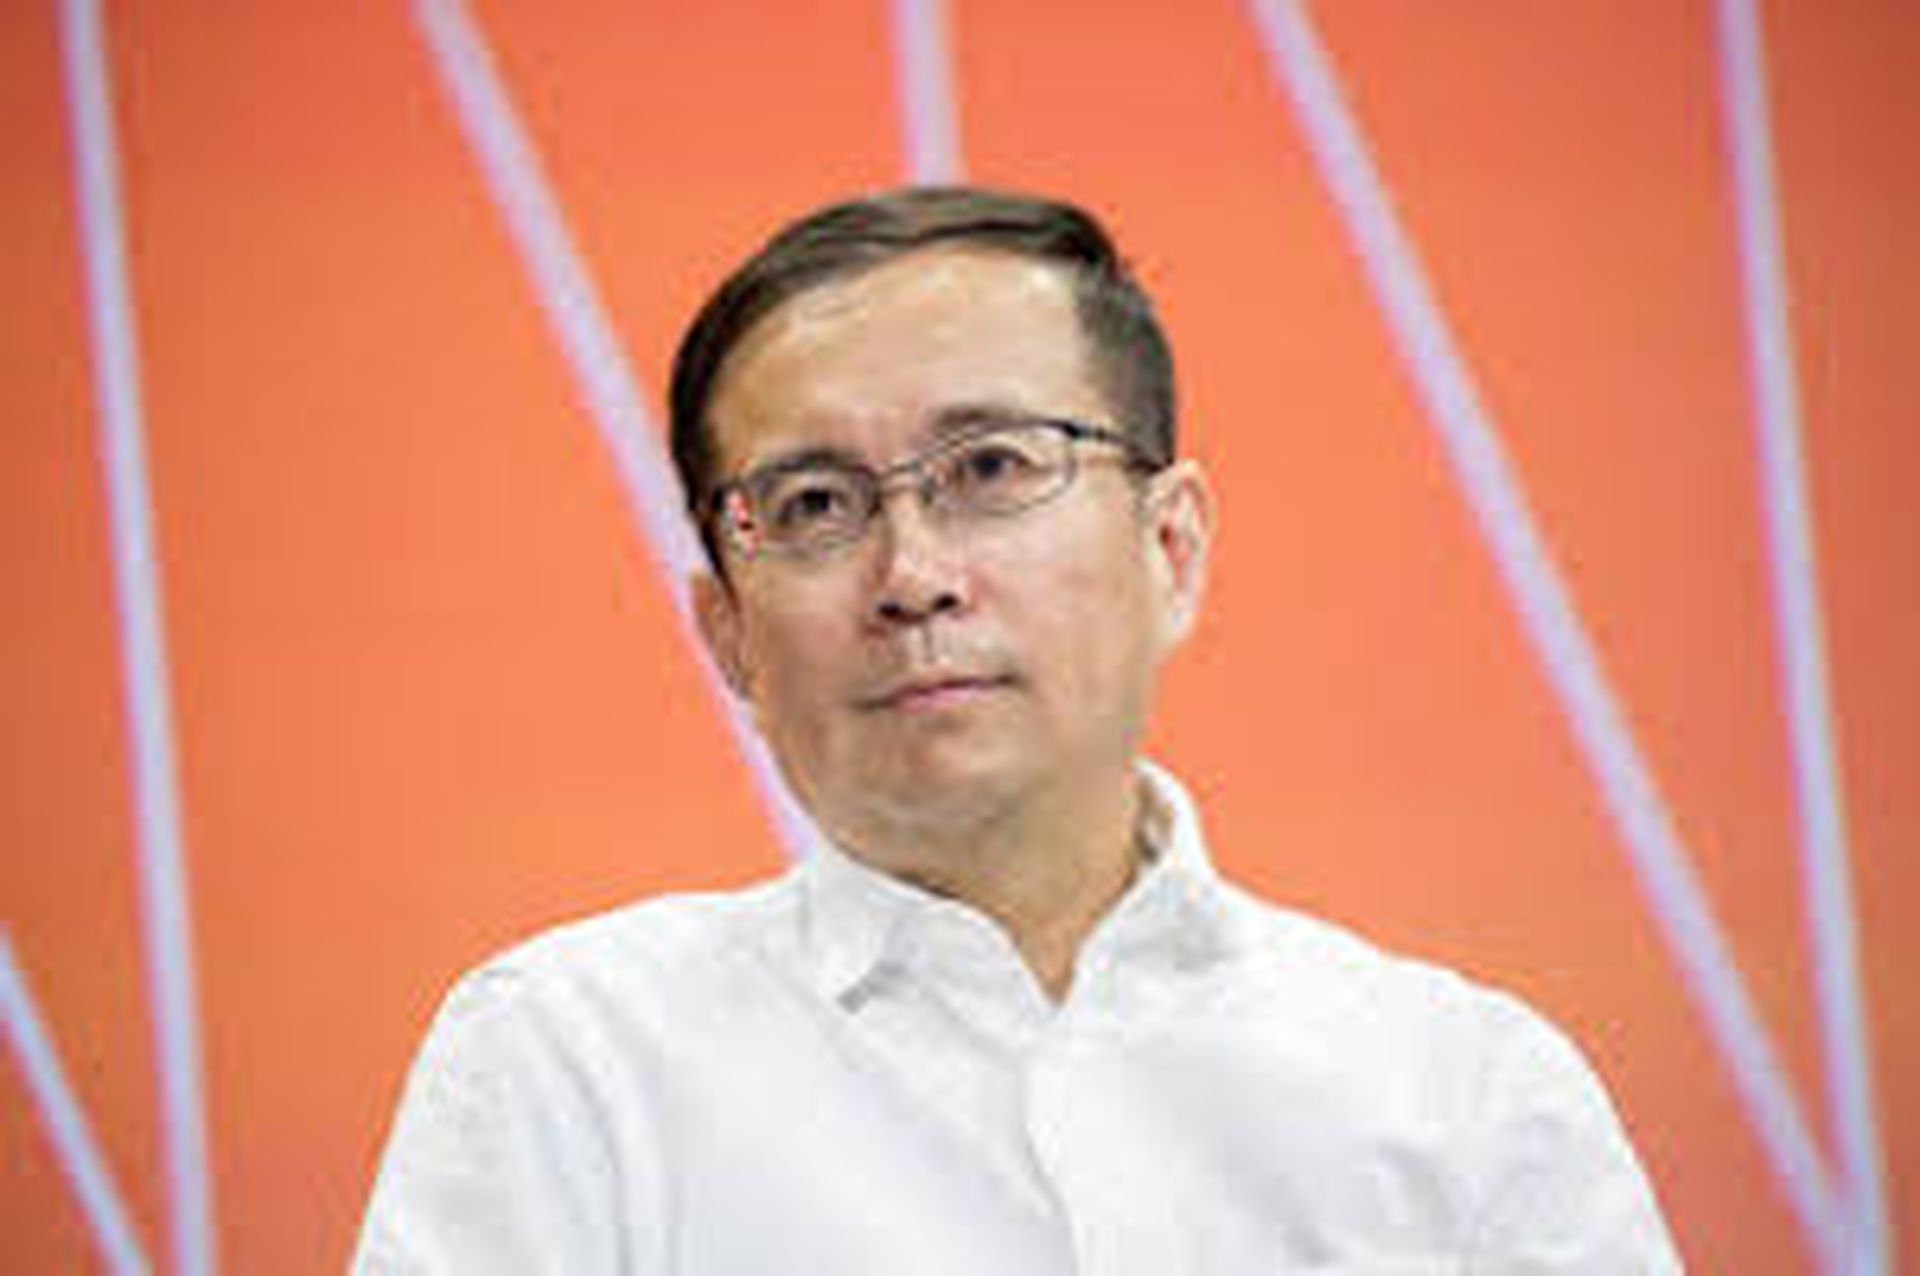 Alibaba Group CEO Daniel Zhang